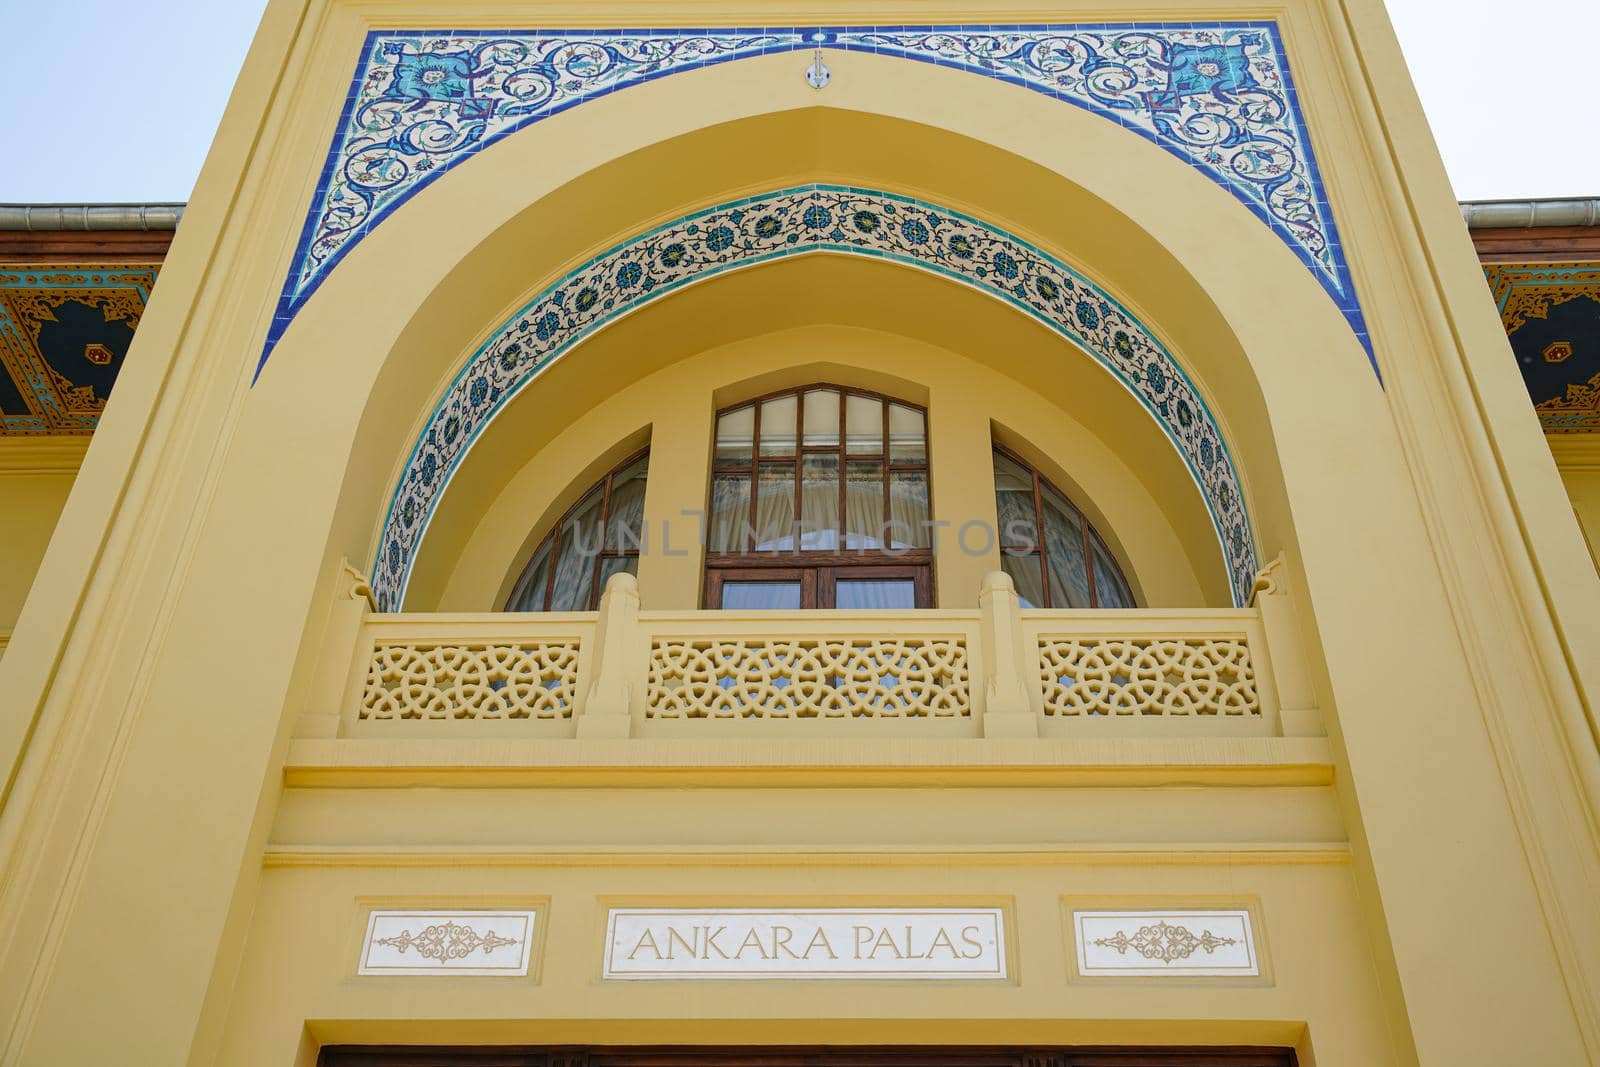 Ankara Place Building in Ankara, Turkiye by EvrenKalinbacak